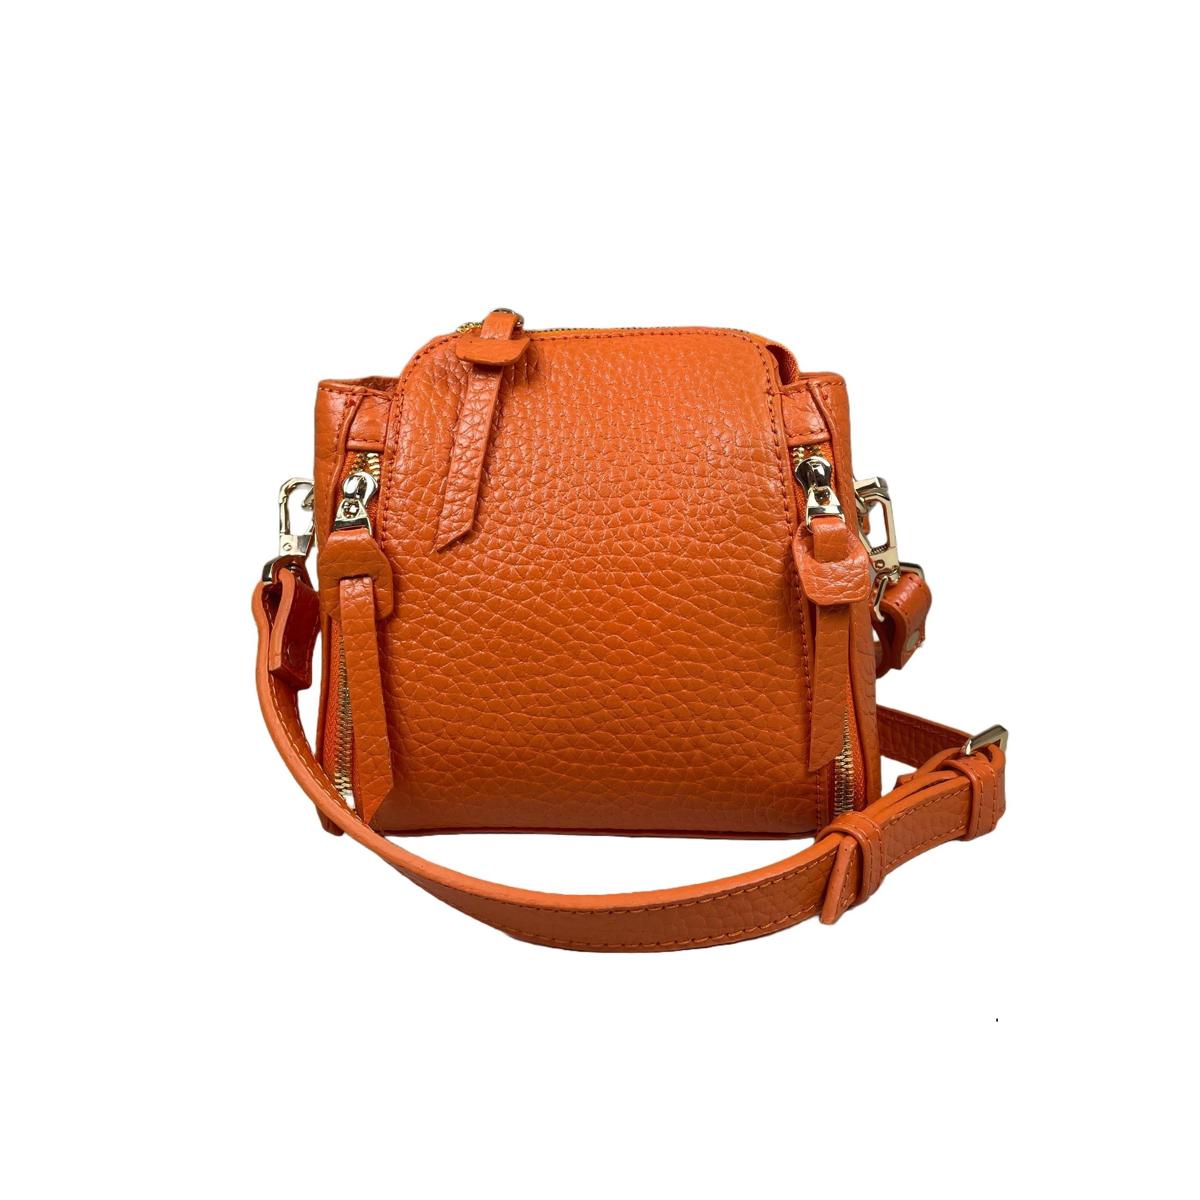 LeatherLuxe - Orange Leather Handbag Shoulder Bag for Women Genuine leather Designer Premium leather bag for women leather hobo tote messenger bag Leather Accessories Leather Shop Leather Goods